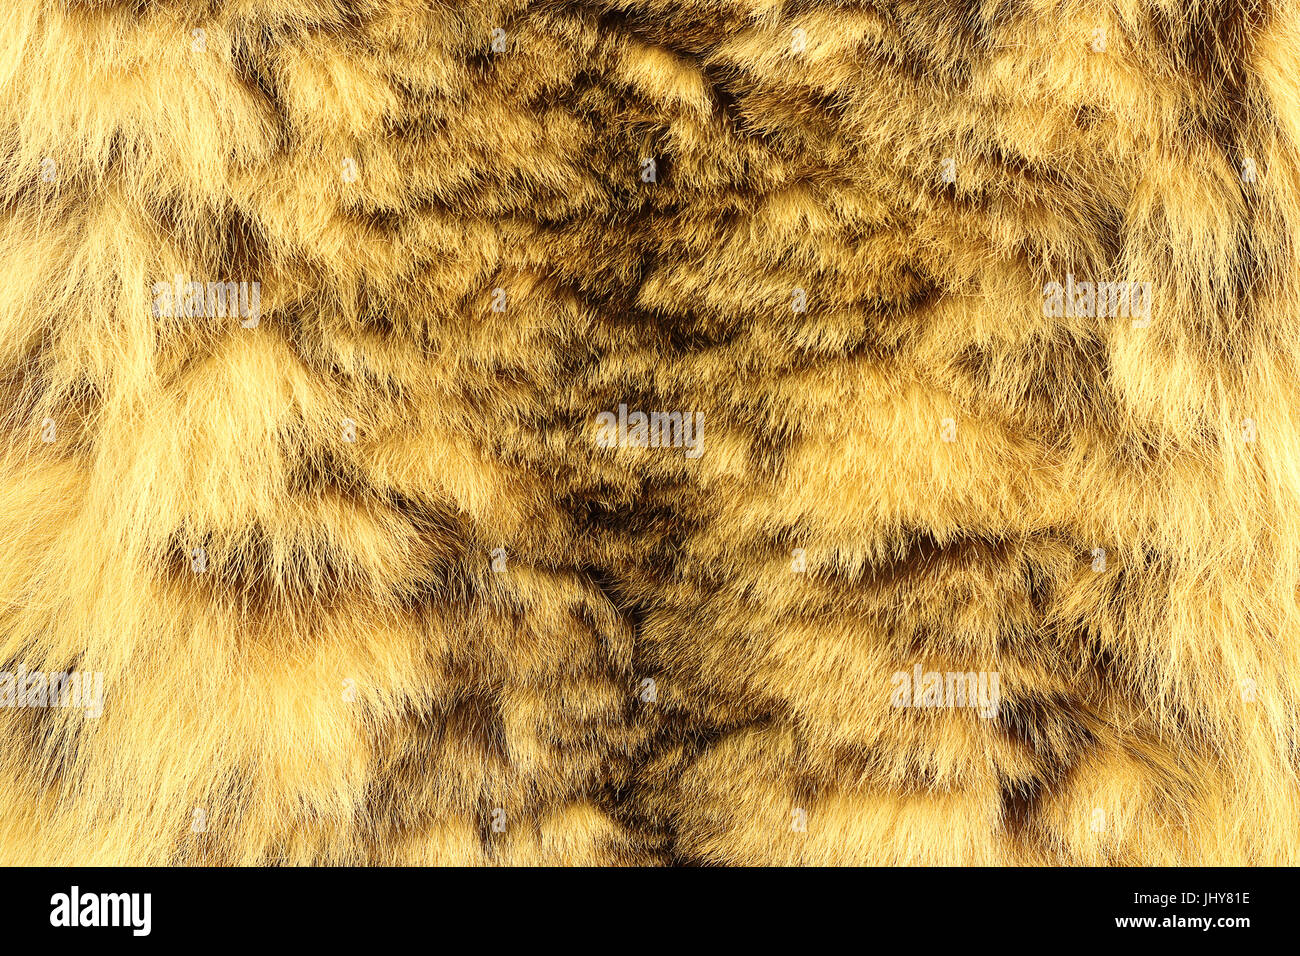 Snow Leopard strukturierte Fell, Leder, echte Tiere (Panthera Uncia) Stockfoto